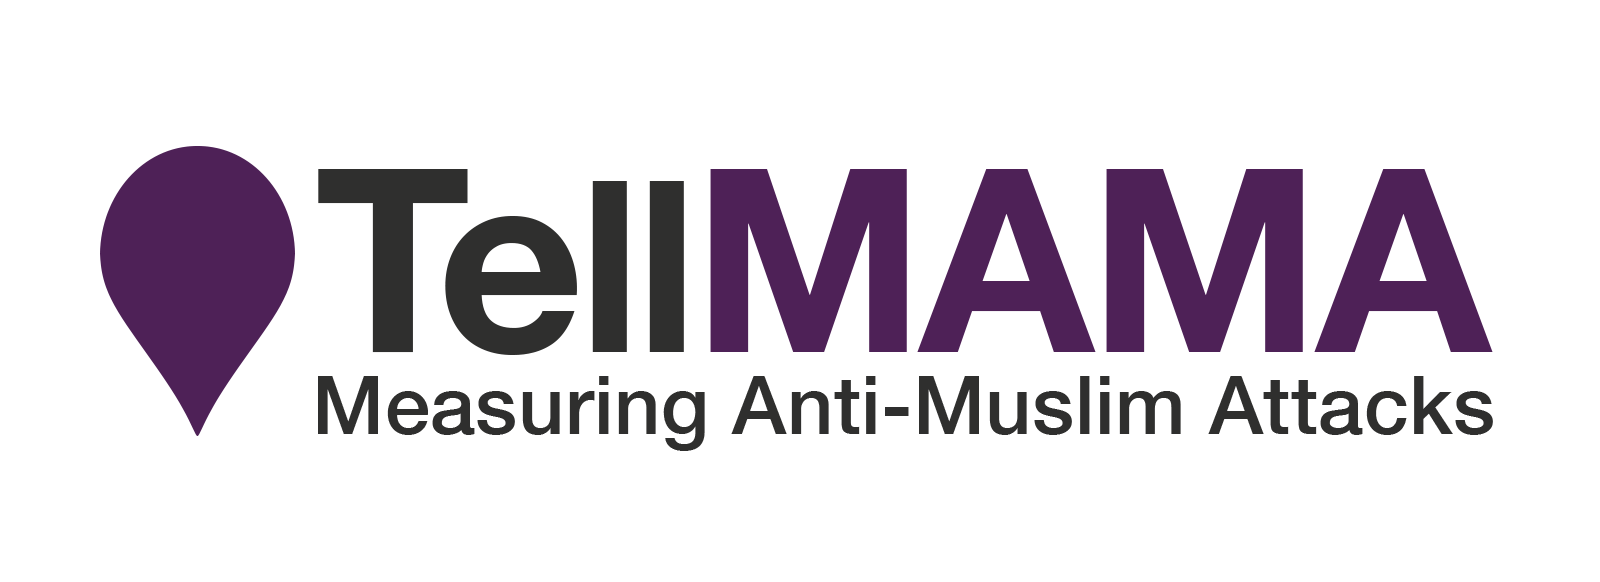 Tell MAMA logo